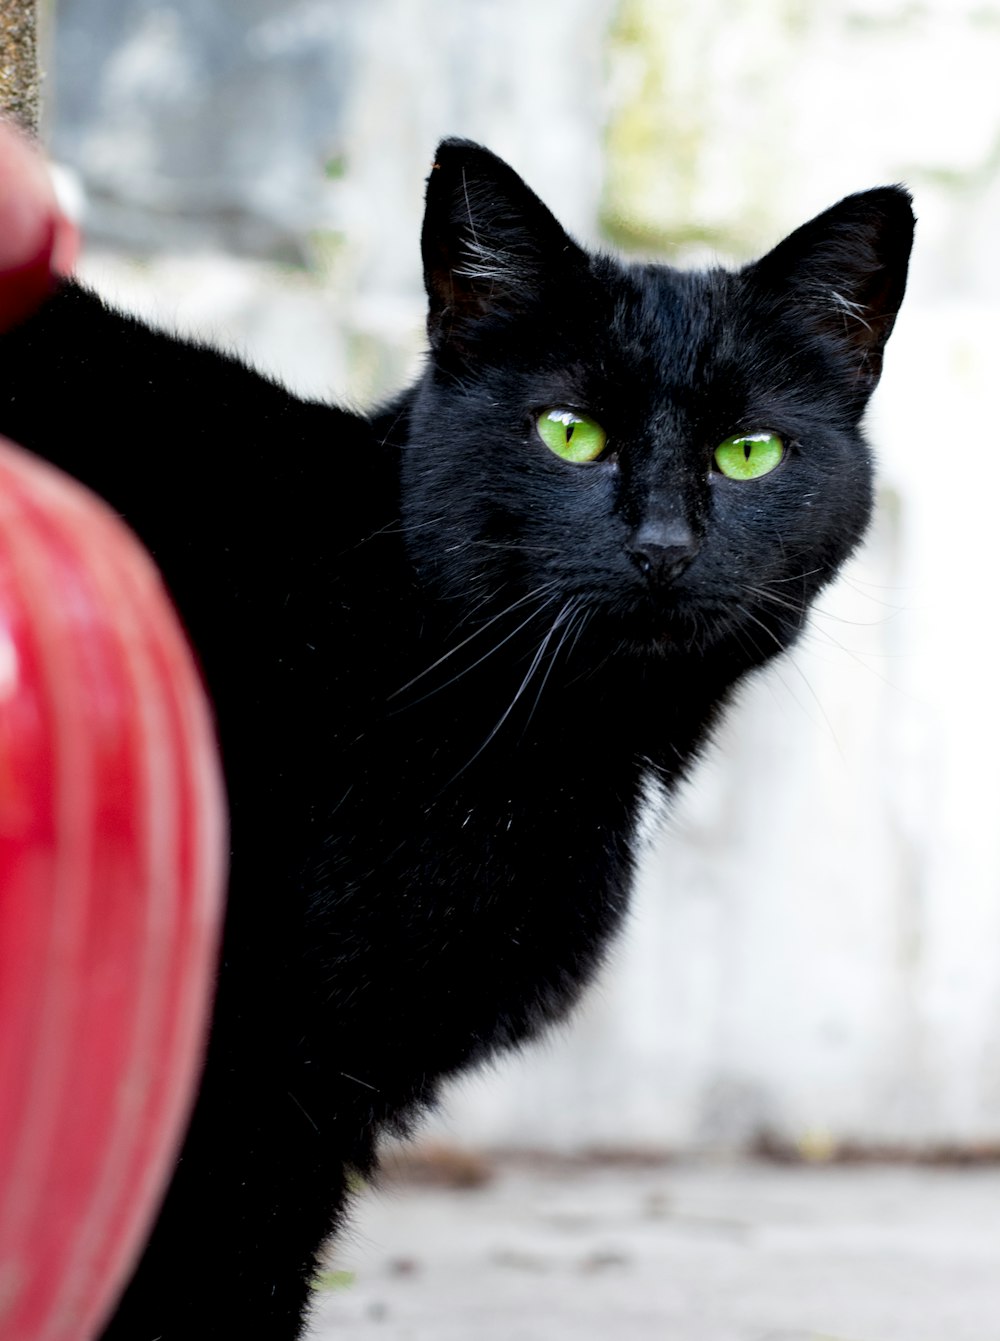 black cat on red plastic container